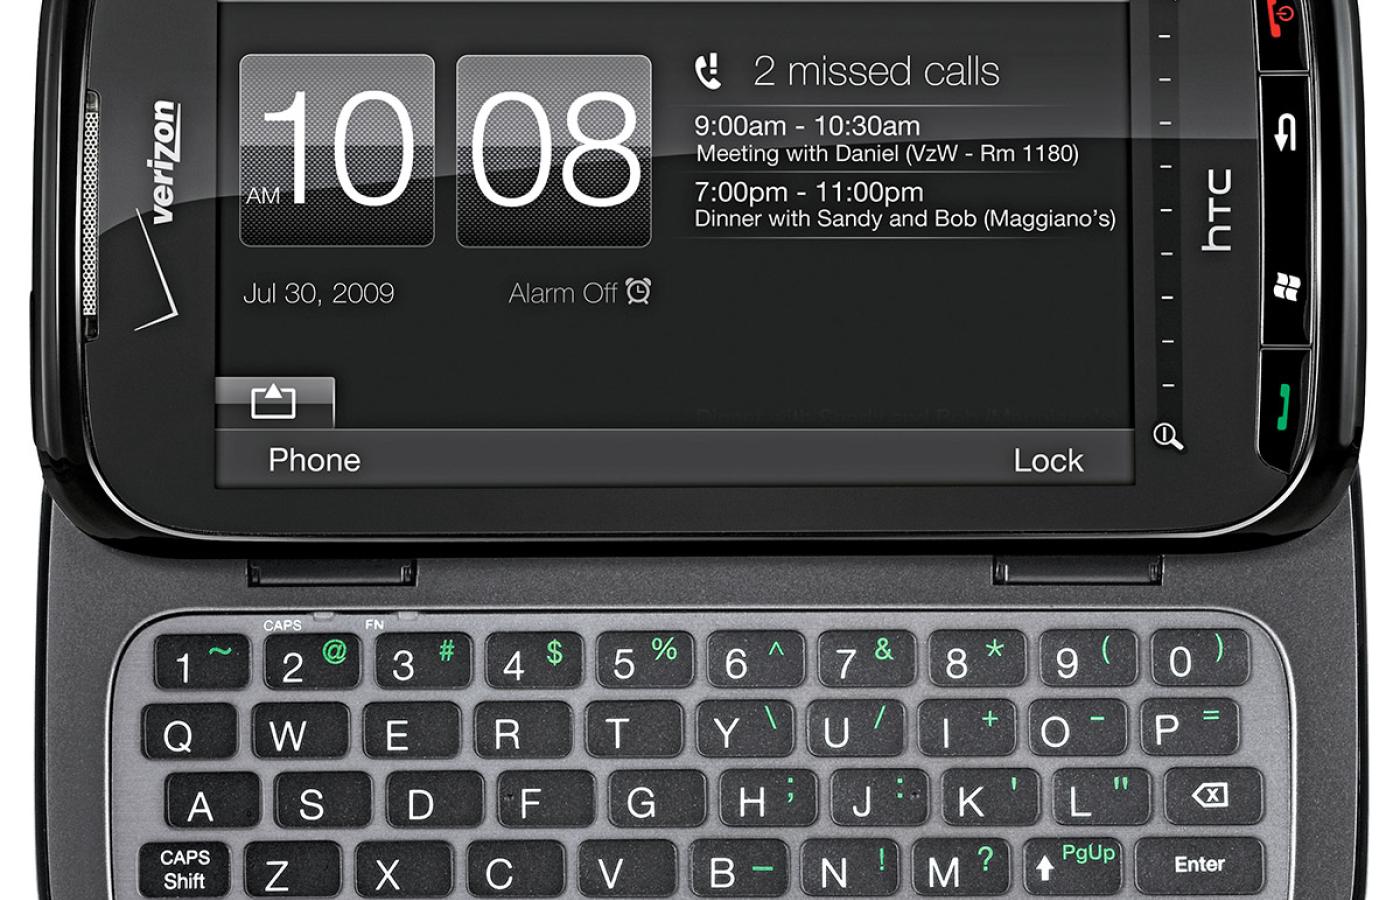 Terminal mobilny HTC PRO 2